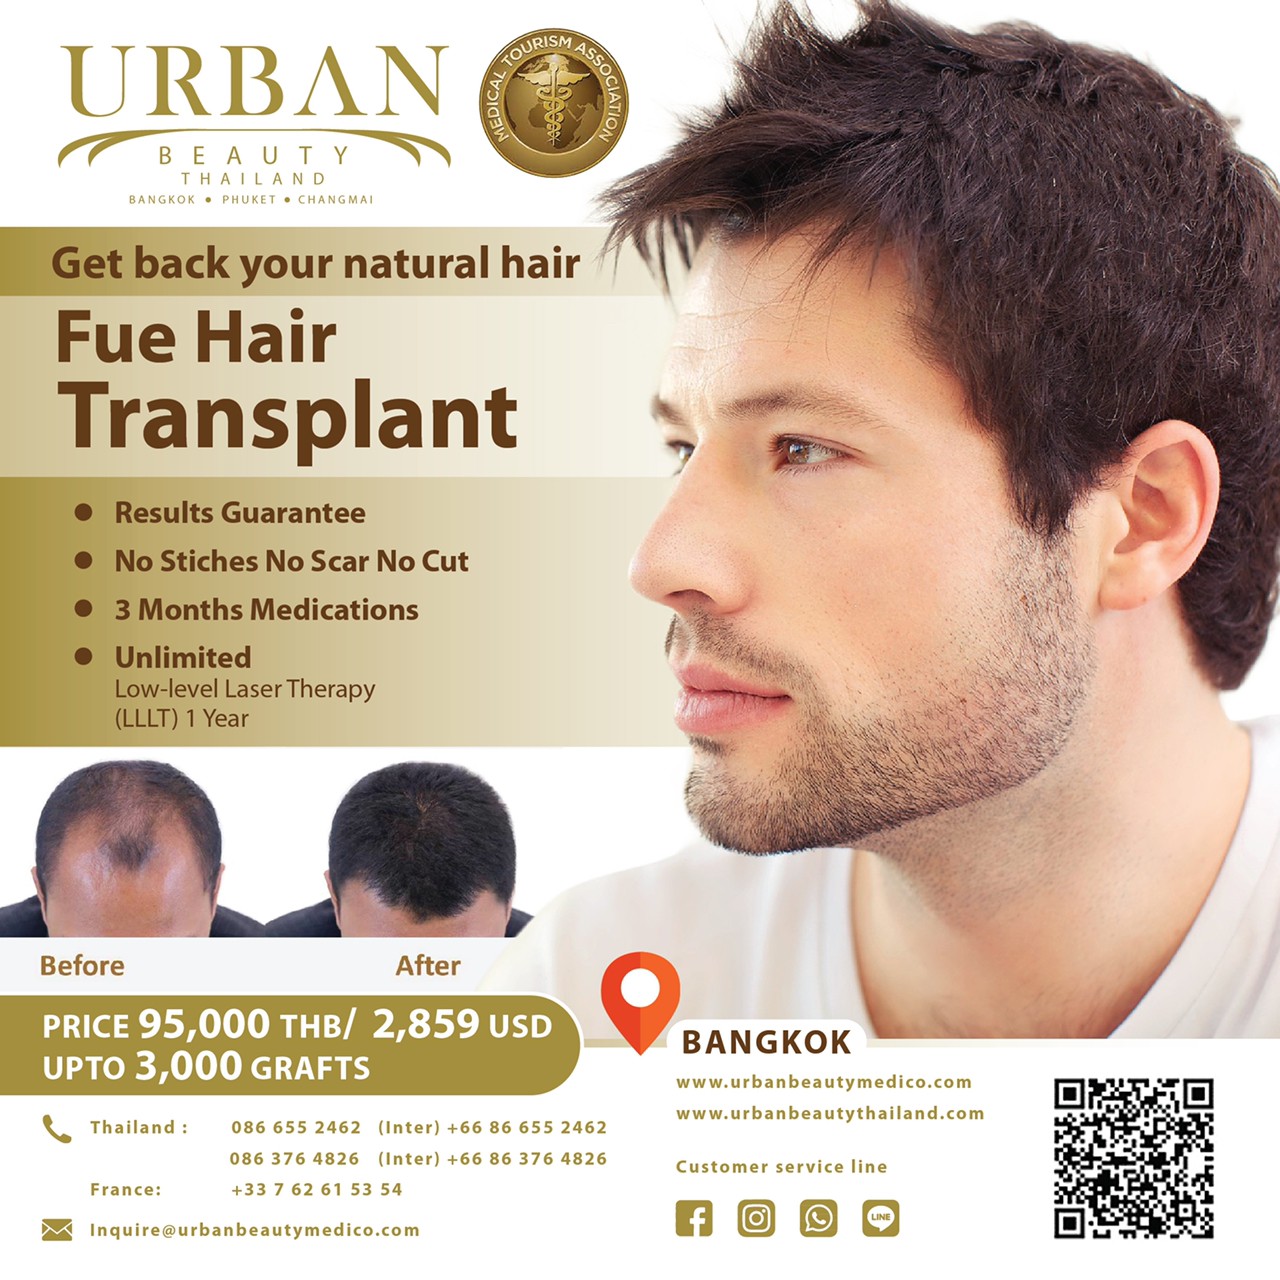 Hair Transplant Technique in Thailand - Urban Beauty Thailand